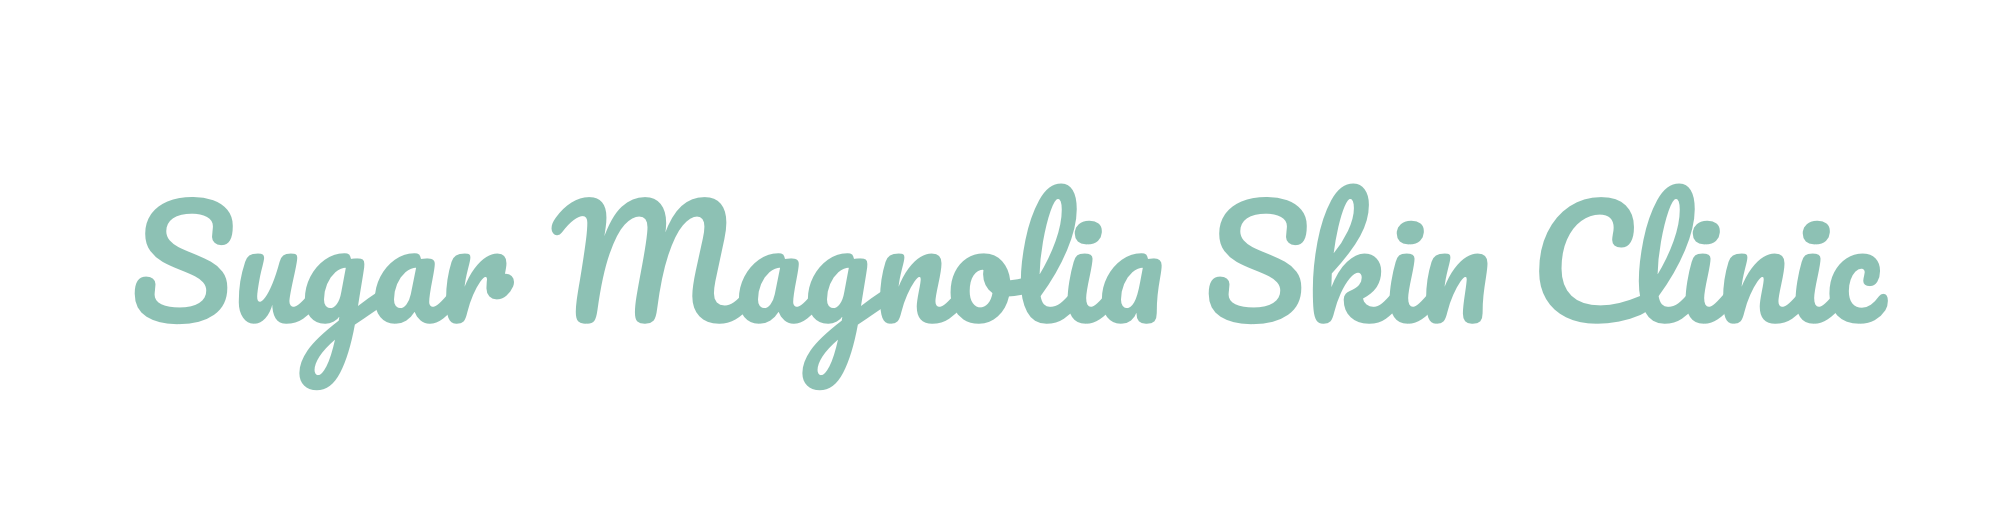 Sugar Magnolia Skin Clinic